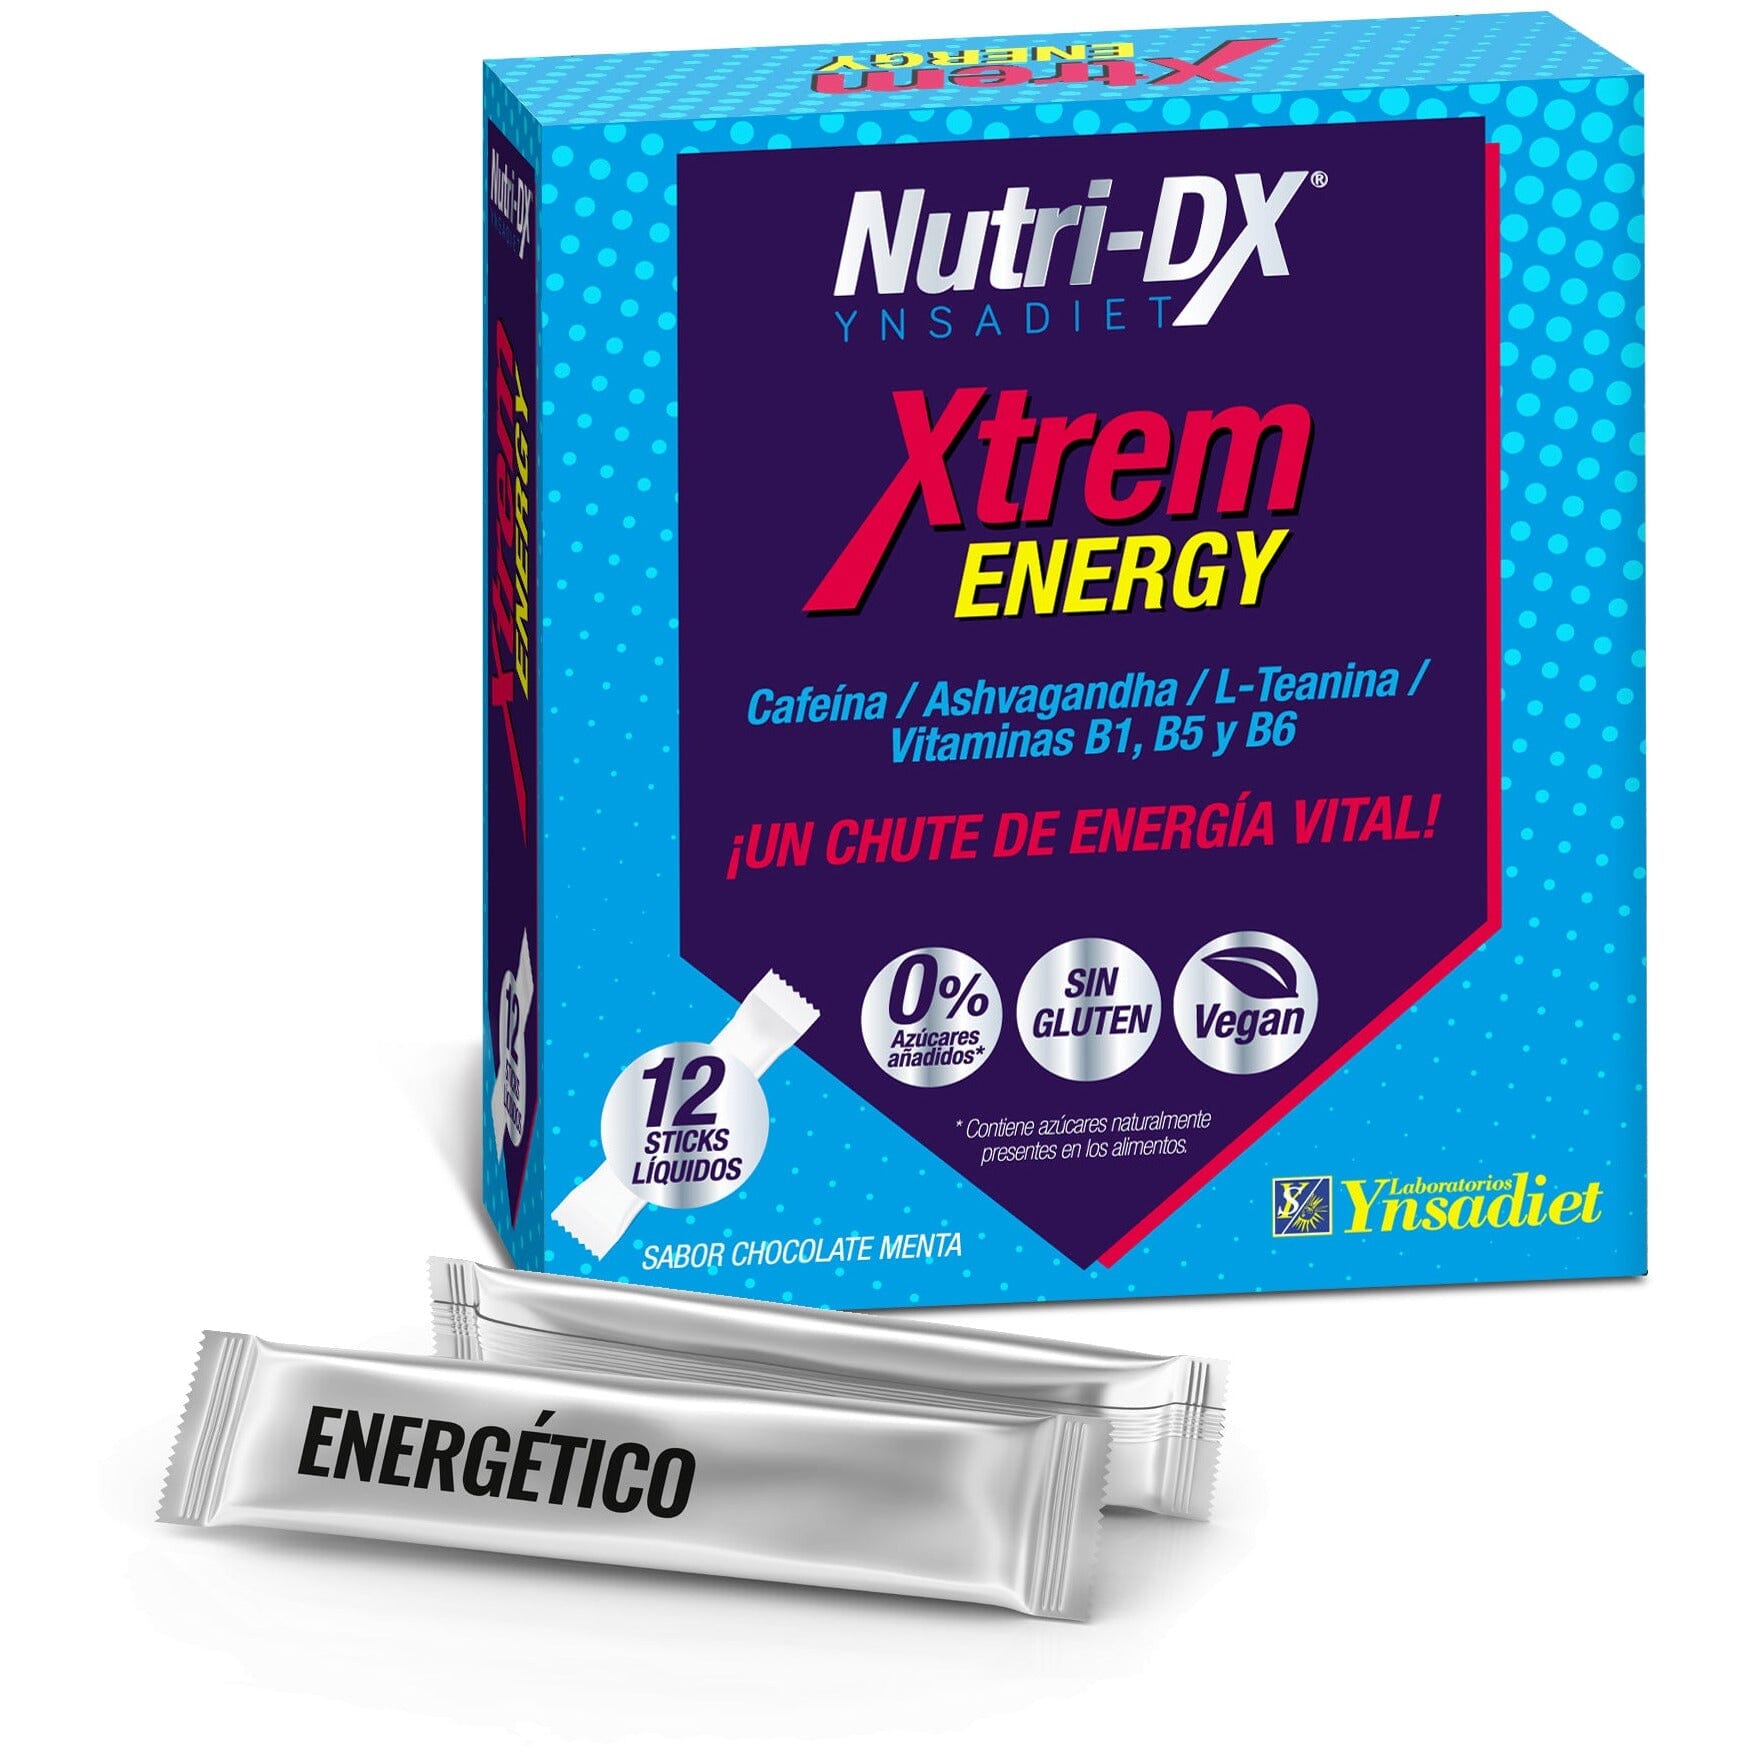 Xtrem Energy Nutri-DX 12 sticks | Ynsadiet - Dietetica Ferrer